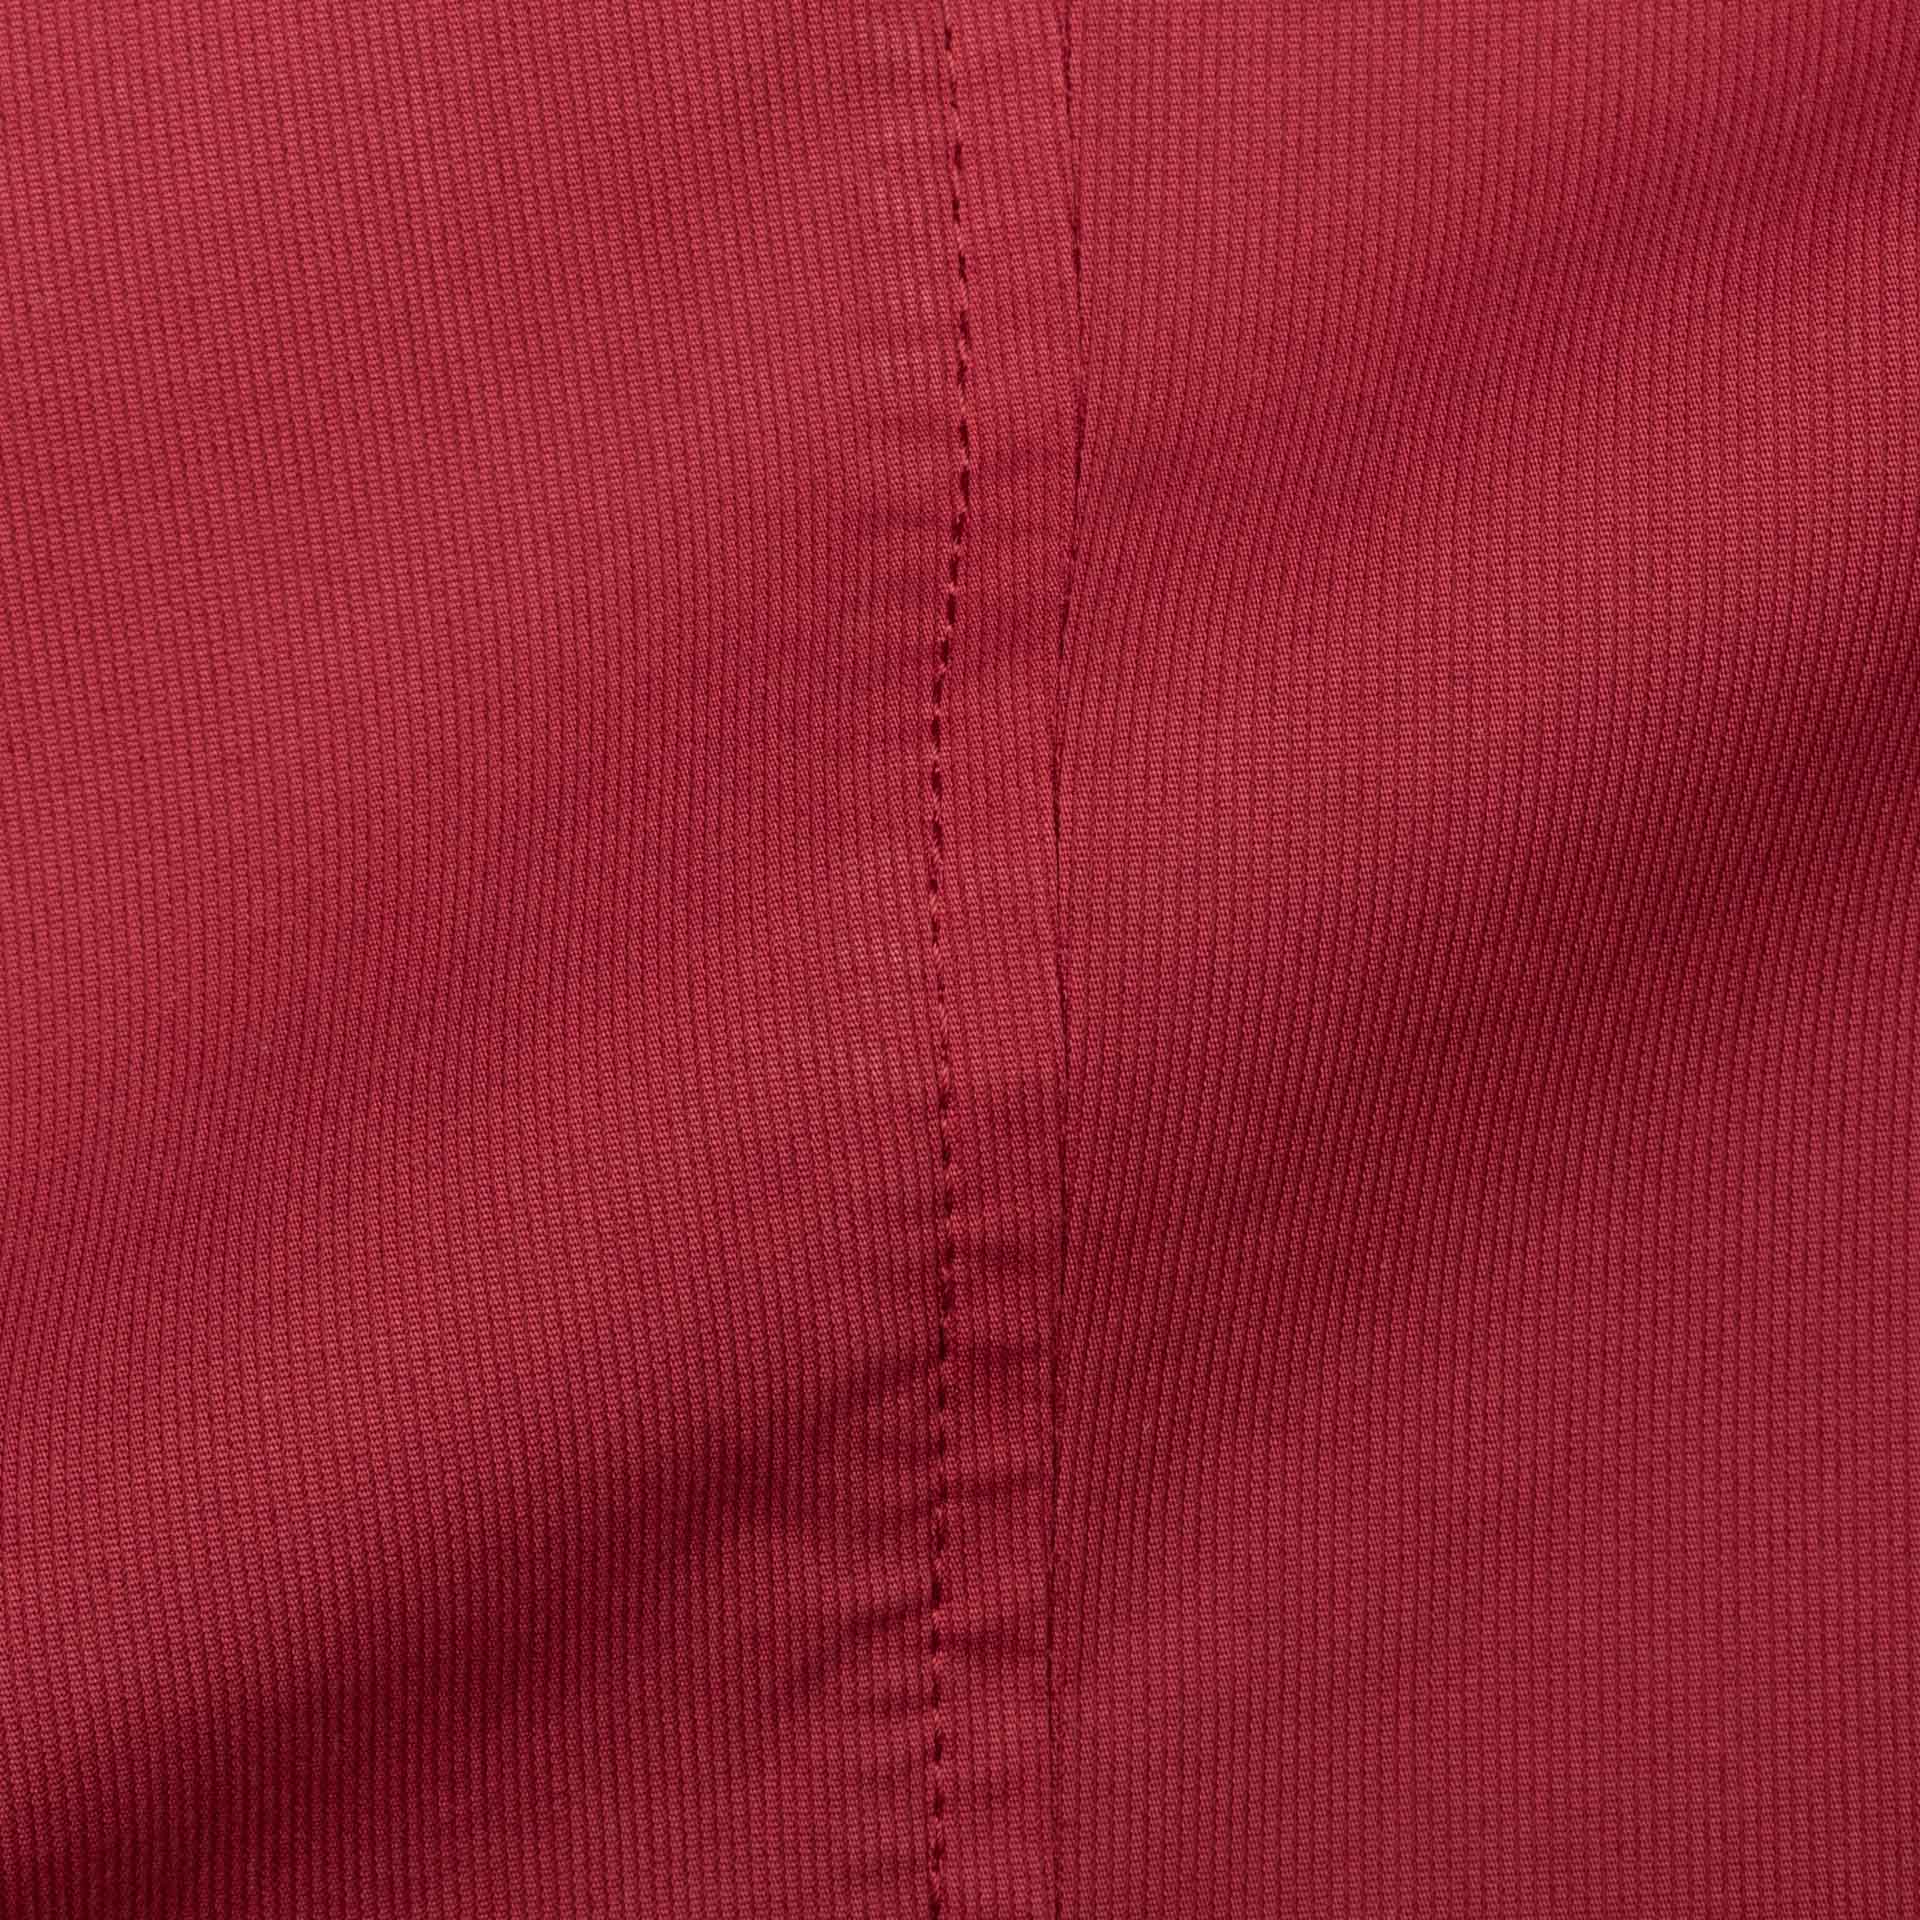 BOGLIOLI Galleria "74" Crimson Cotton 4 Button Jersey Jacket EU 50 NEW US 40